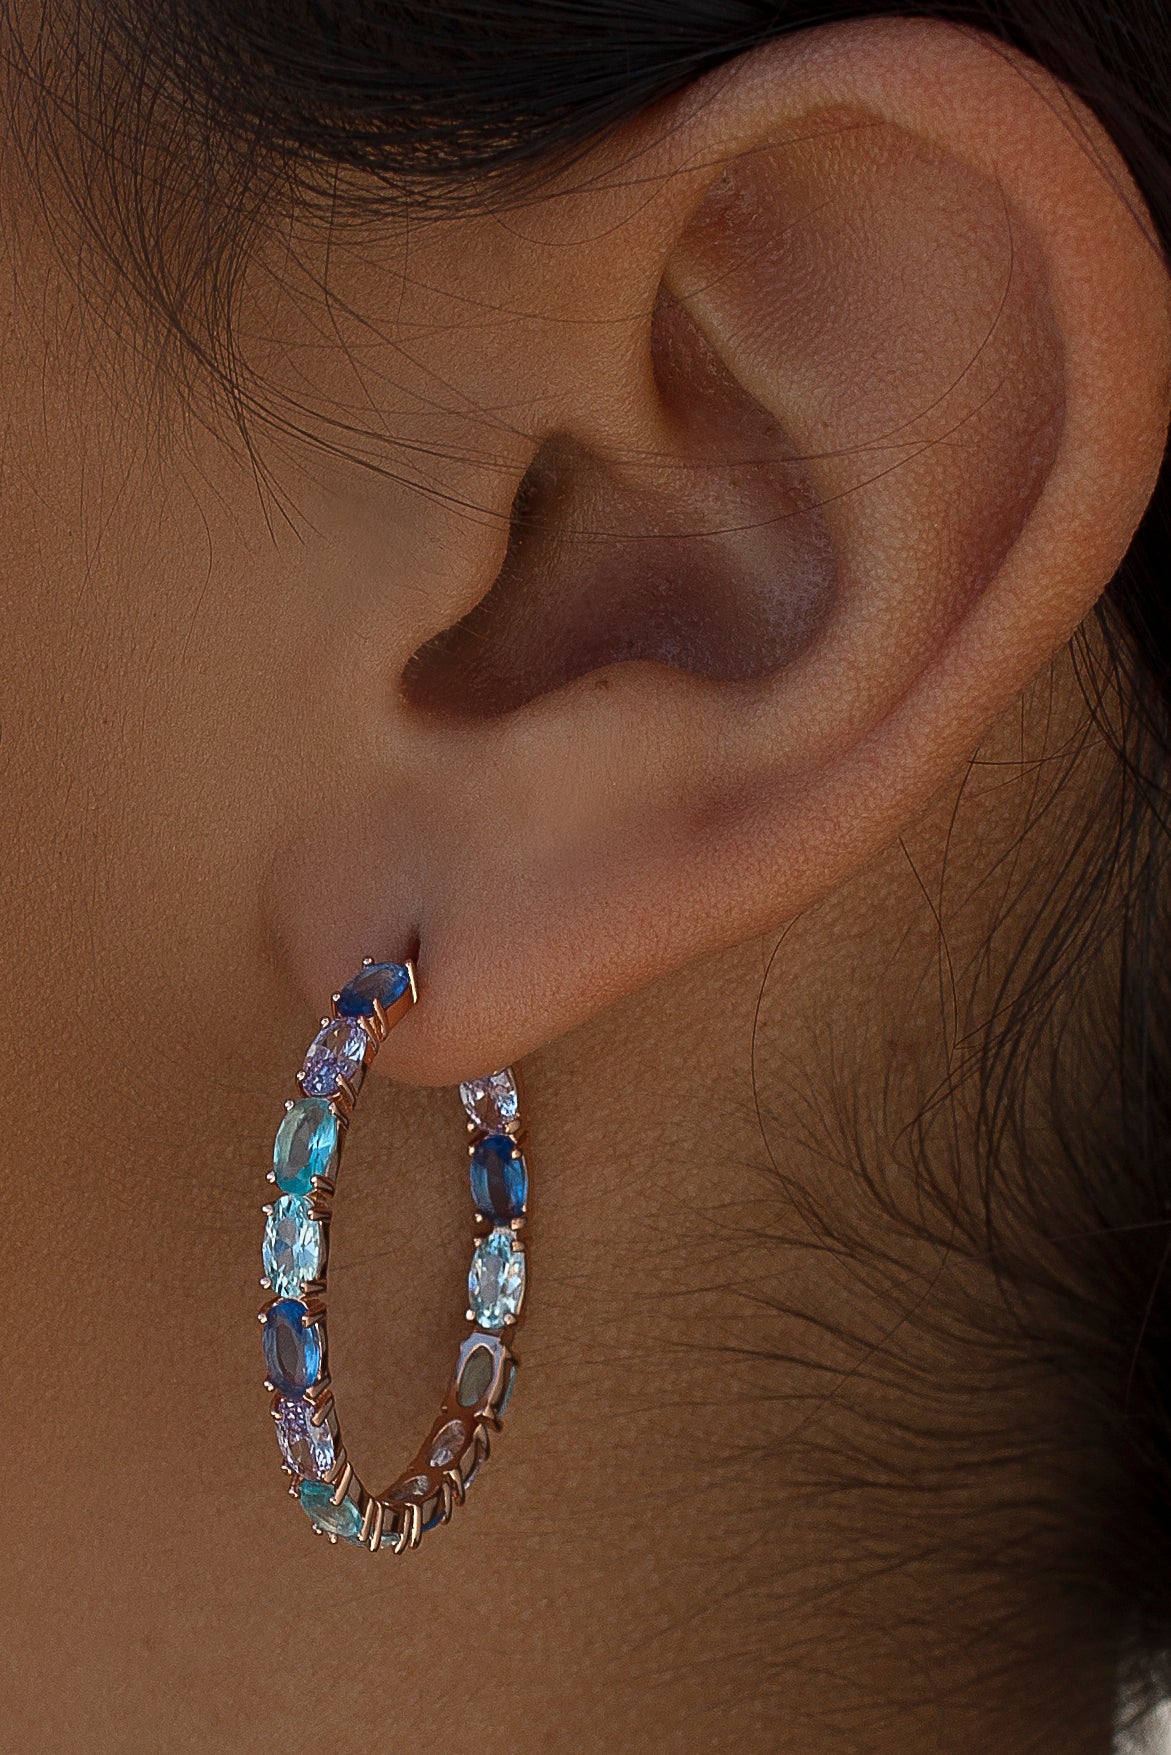 Earrings - Hoop earrings with oval cut stones in blue tones